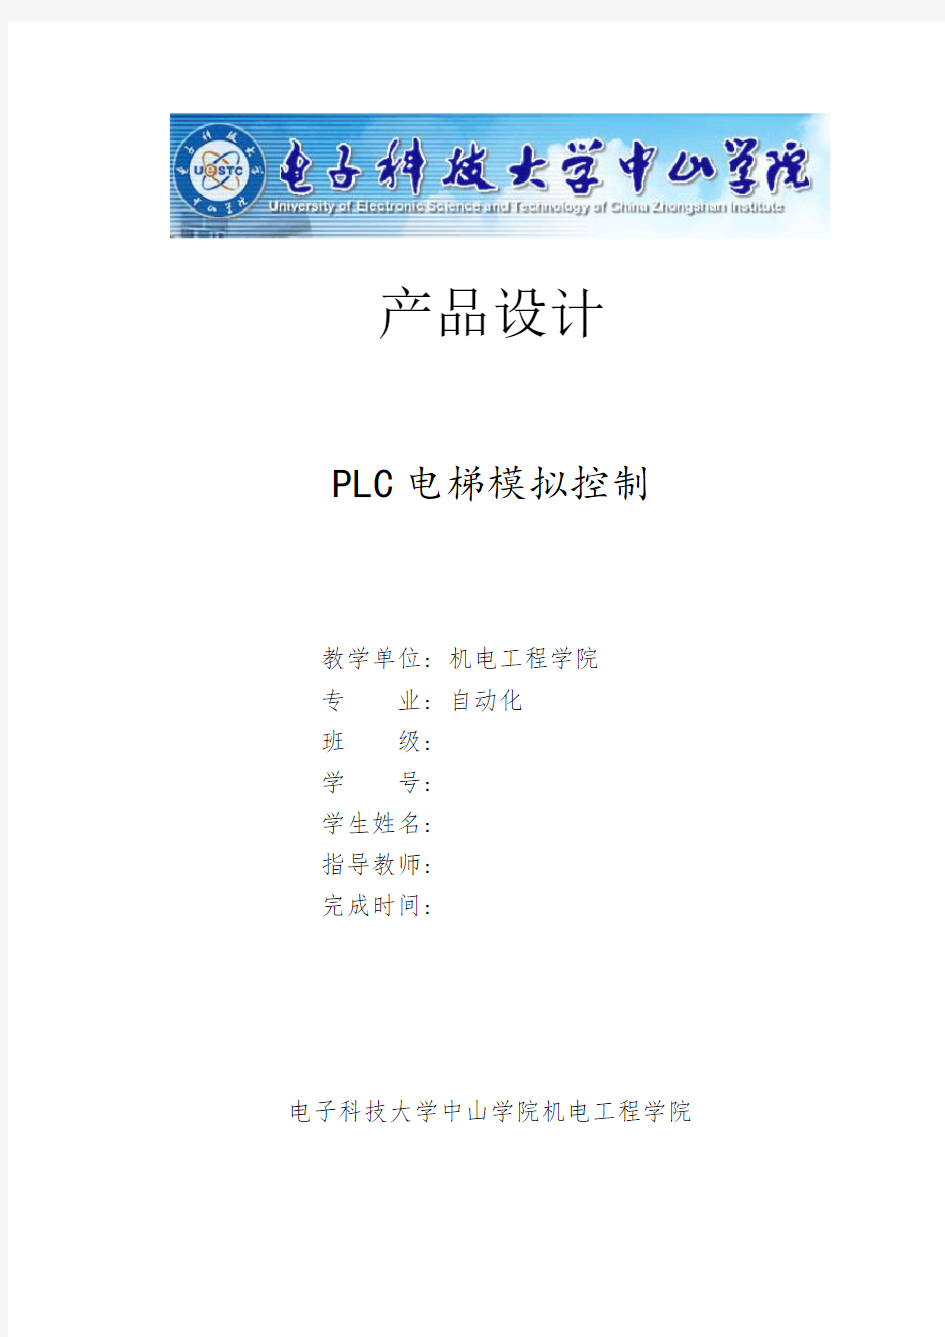 PLC电梯模拟控制(4层简单程序)